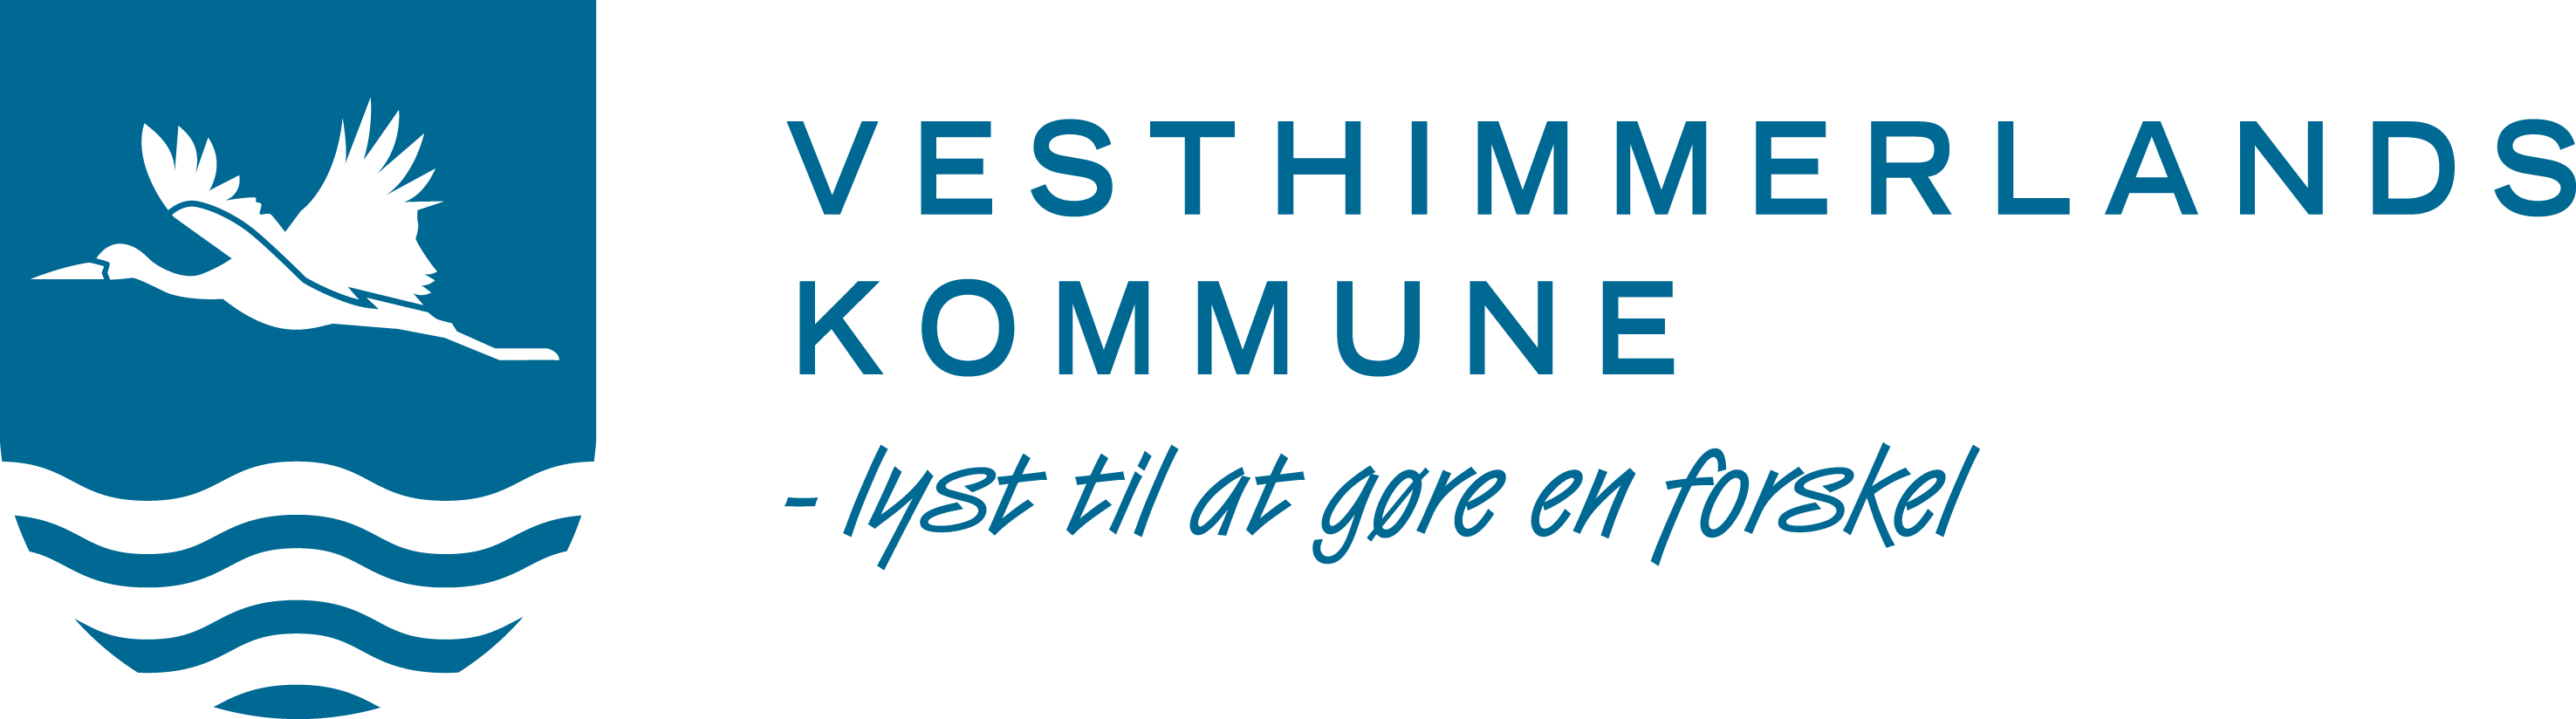 vesthimmerlands kommune logo